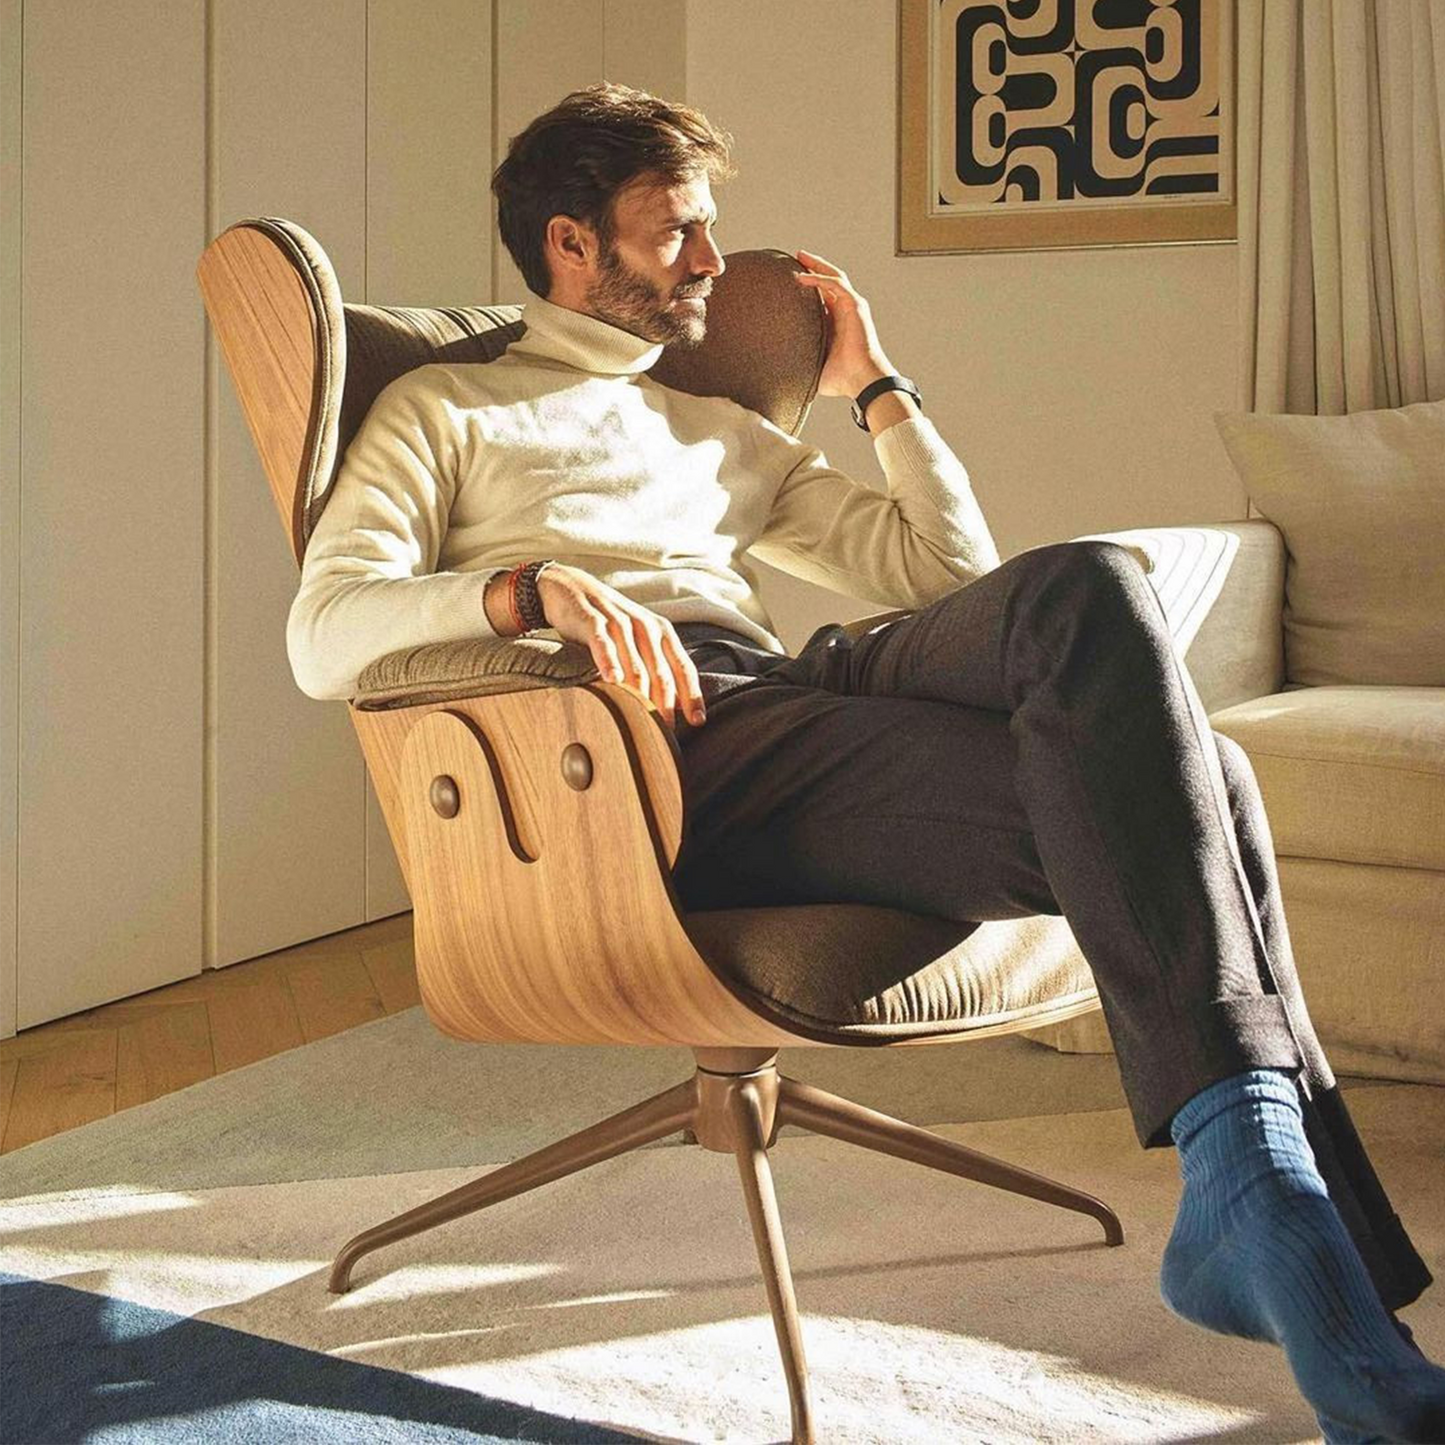 BD Barcelona Design Lounger armchair fotelis